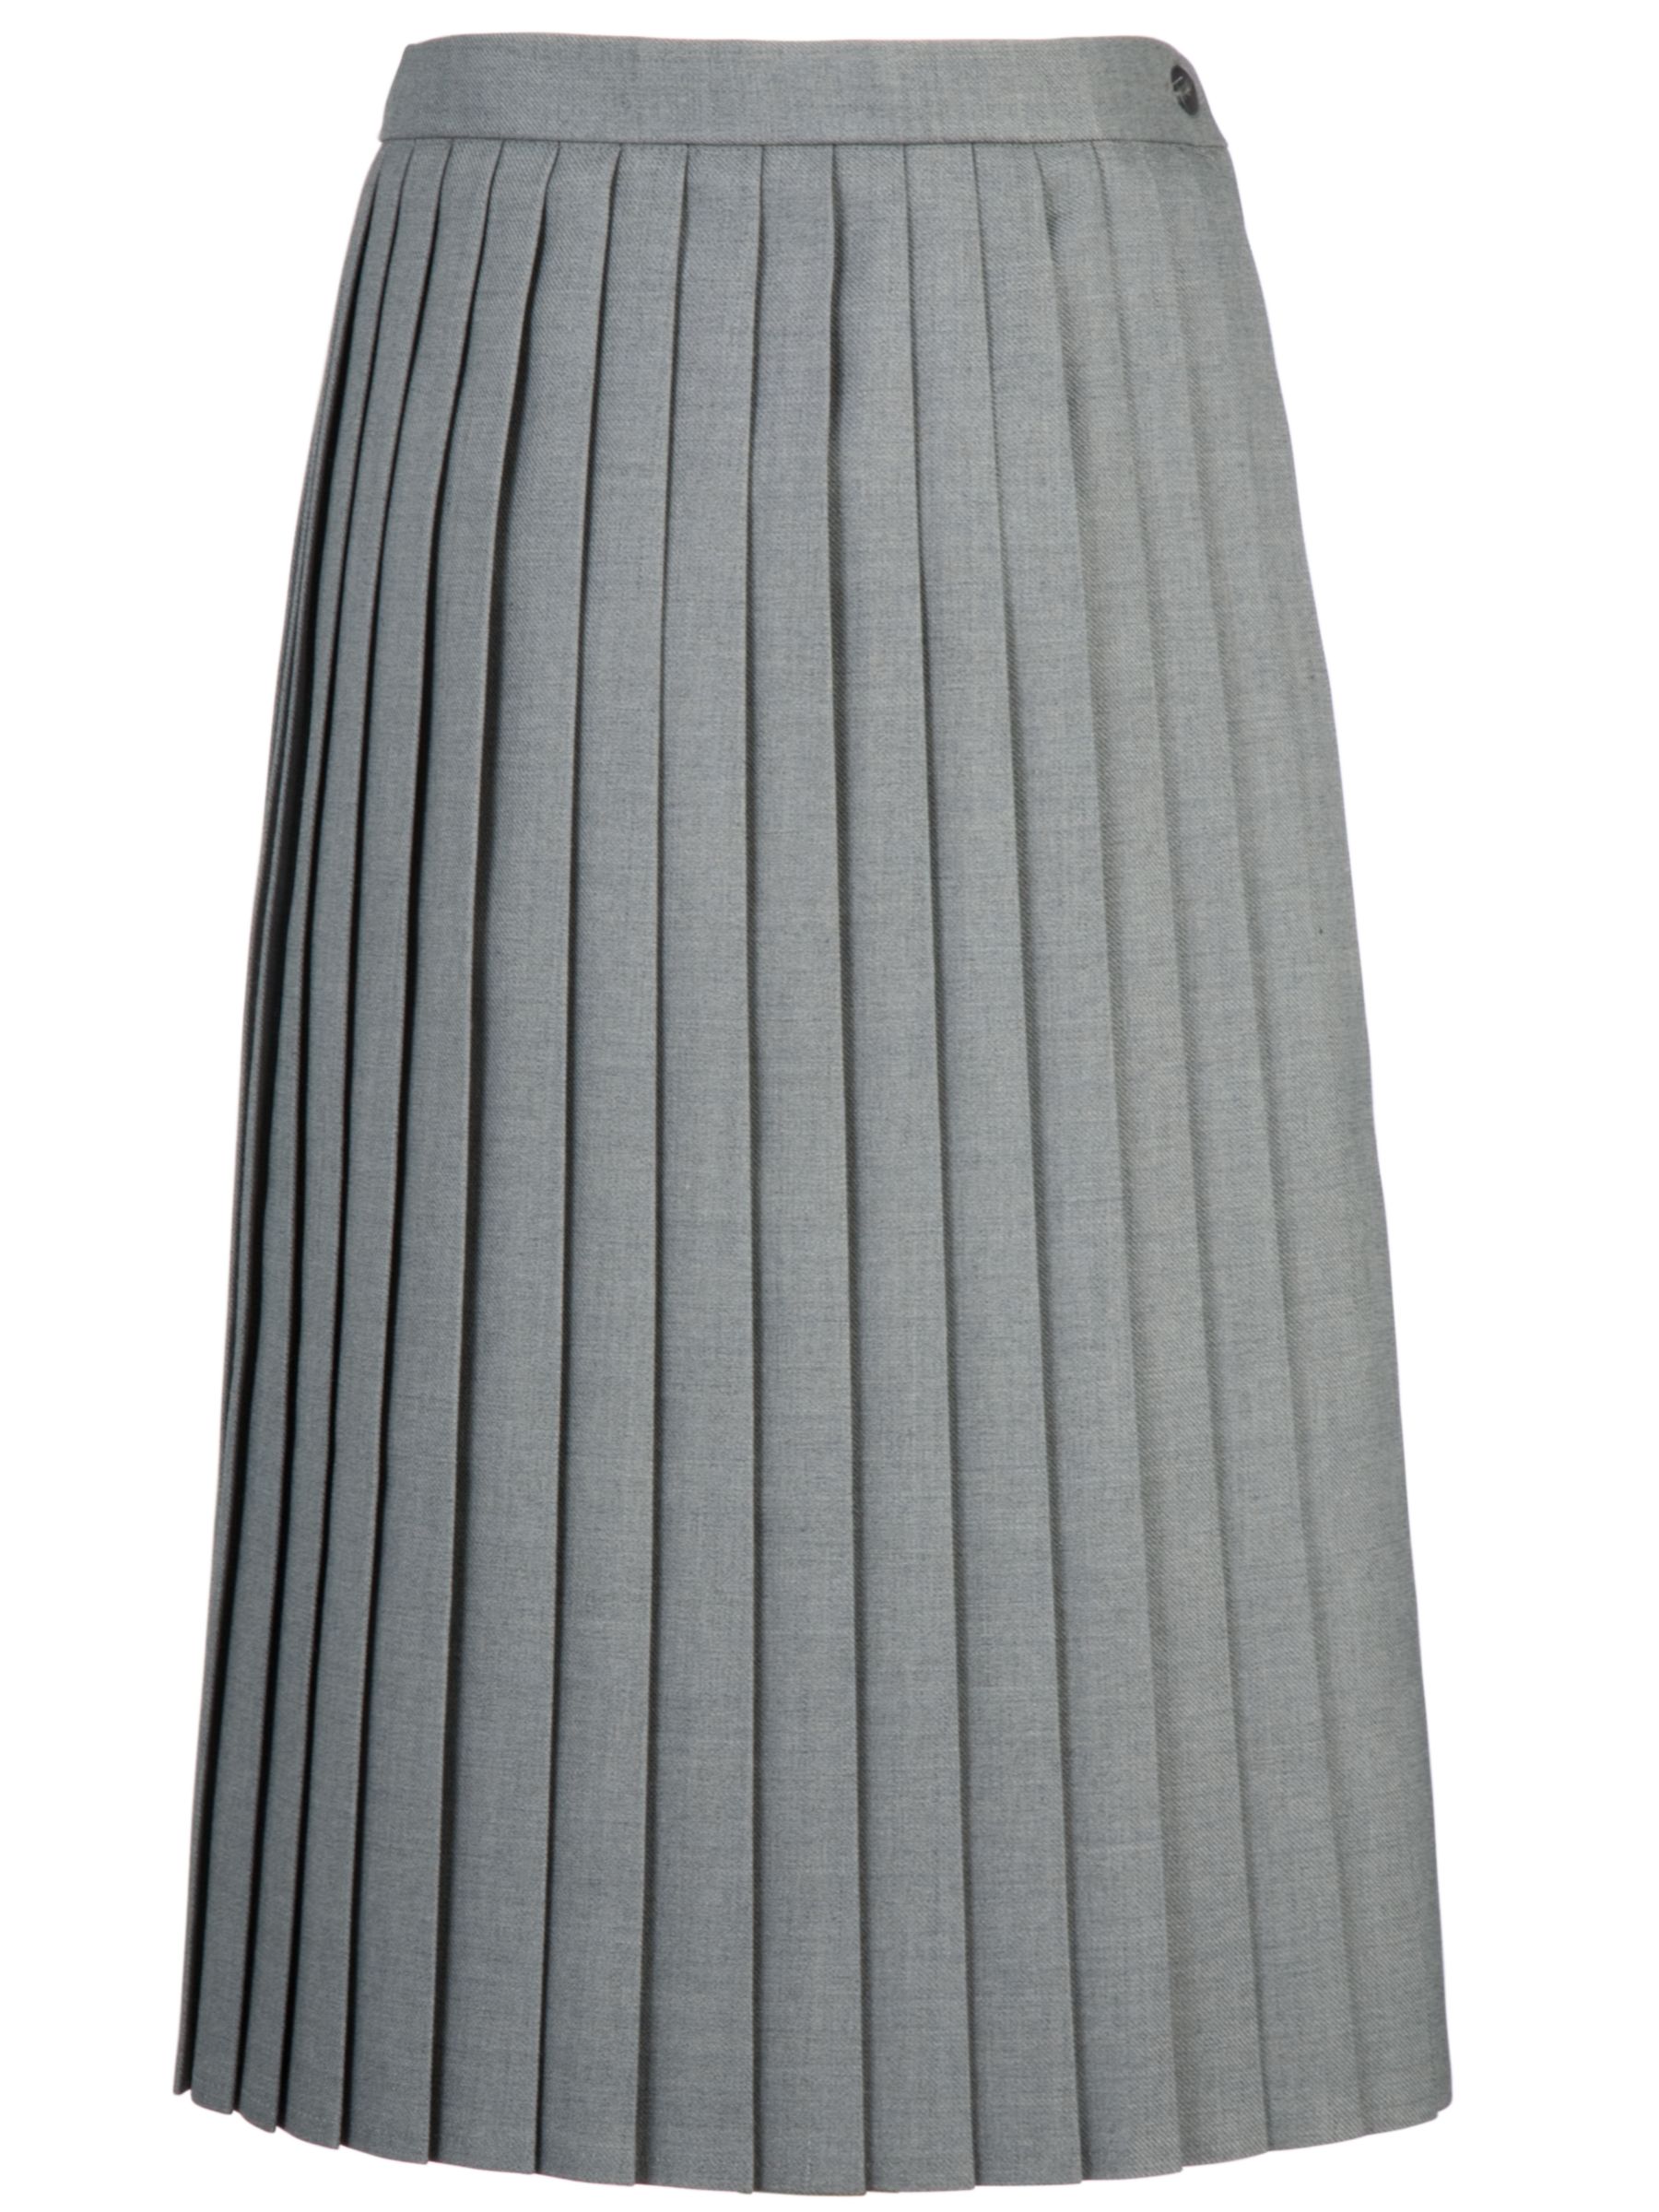 Girls' School Pleat Skirt, Light grey at John Lewis & Partners